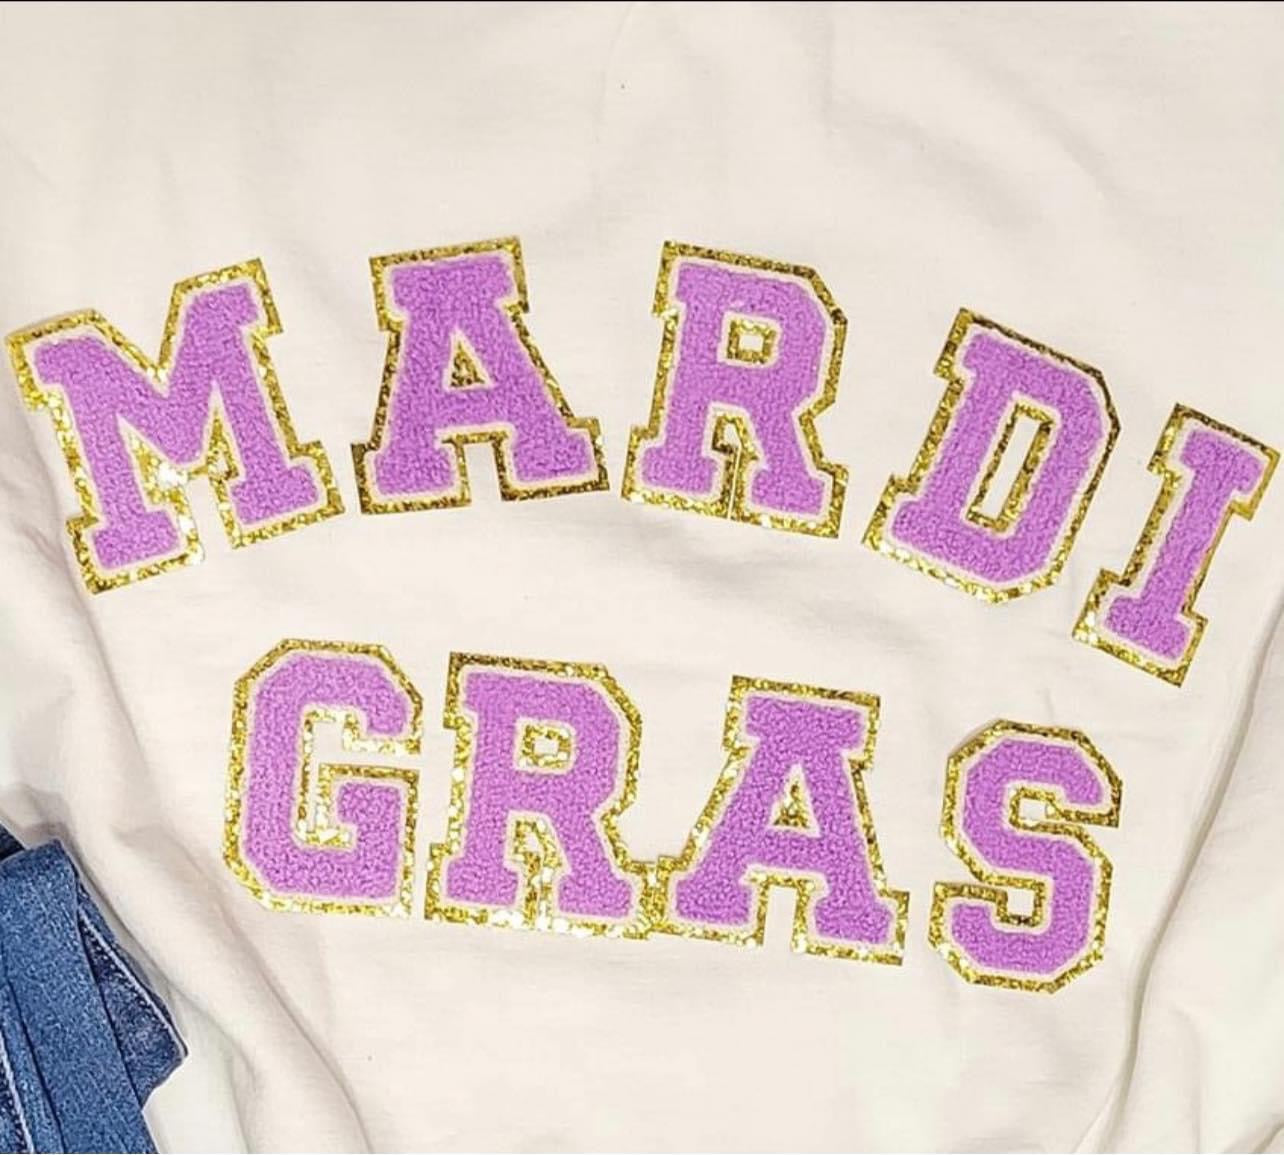 Mardi Gras patches, Mardi Gras mask, parade shirt, chenille patch, gli – Gi  Gi's Boutique